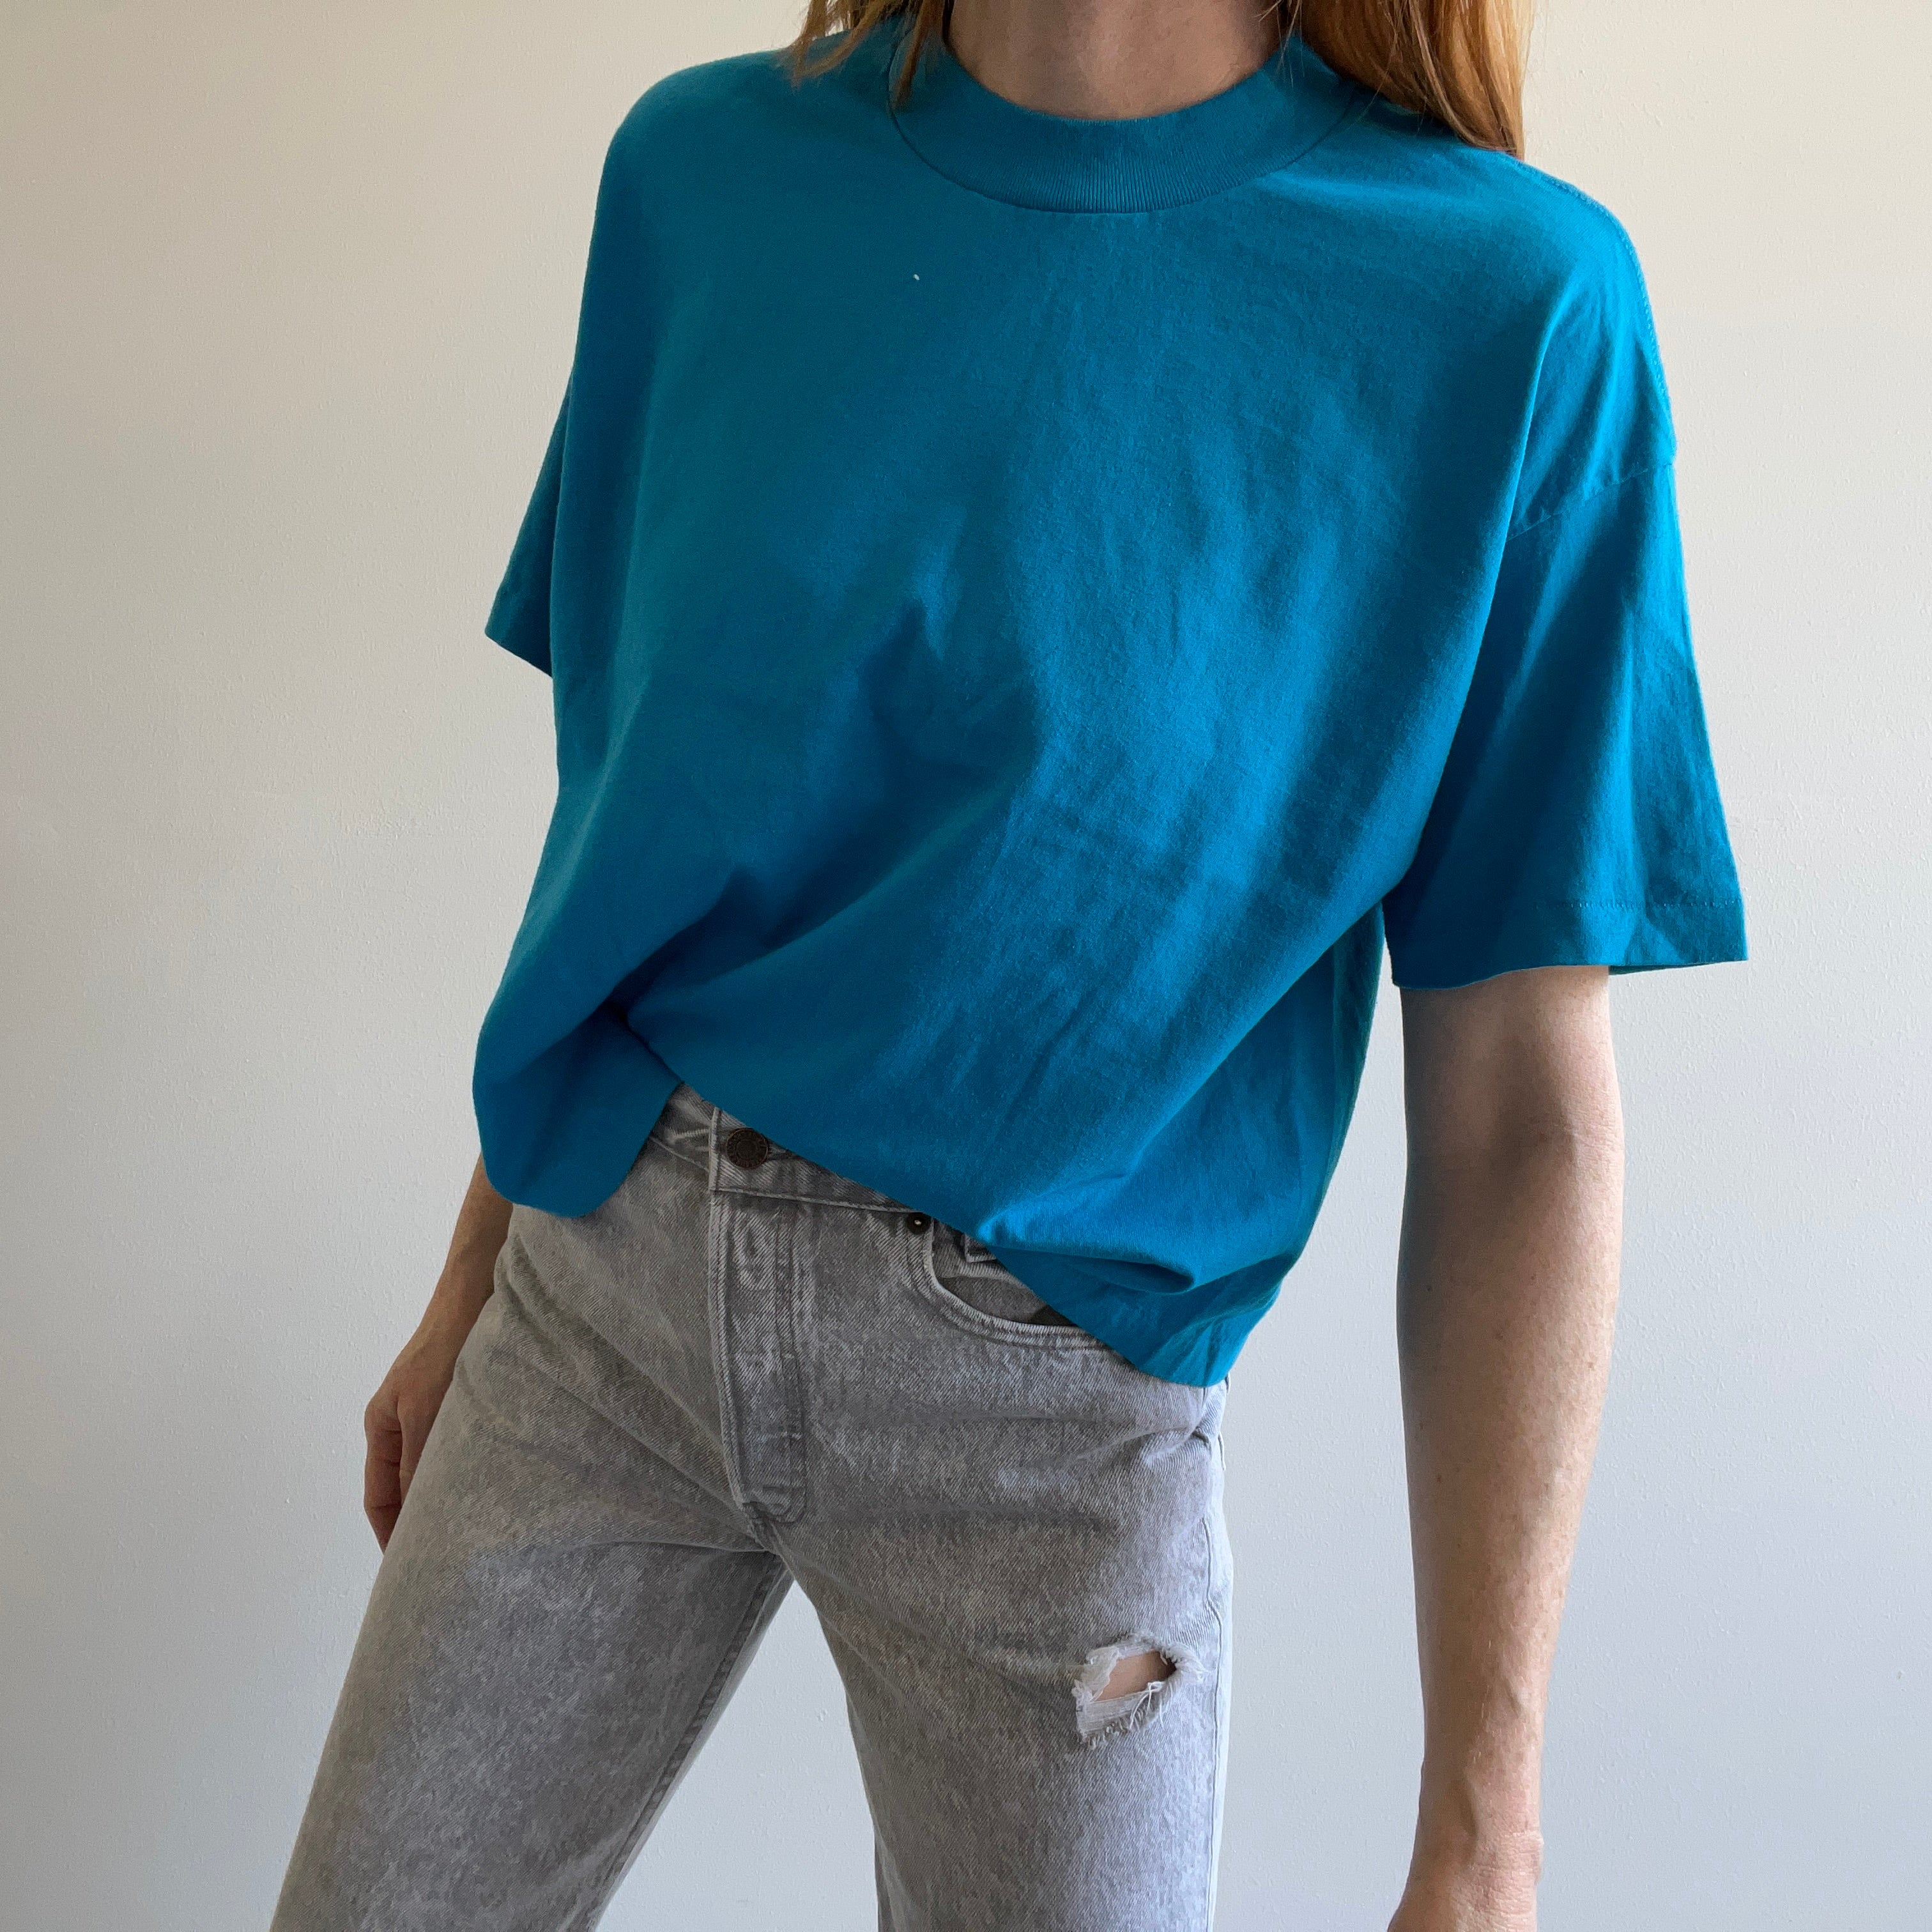 1980s Blank Turquoise Cotton Boxy T-Shirt by Sunbelt